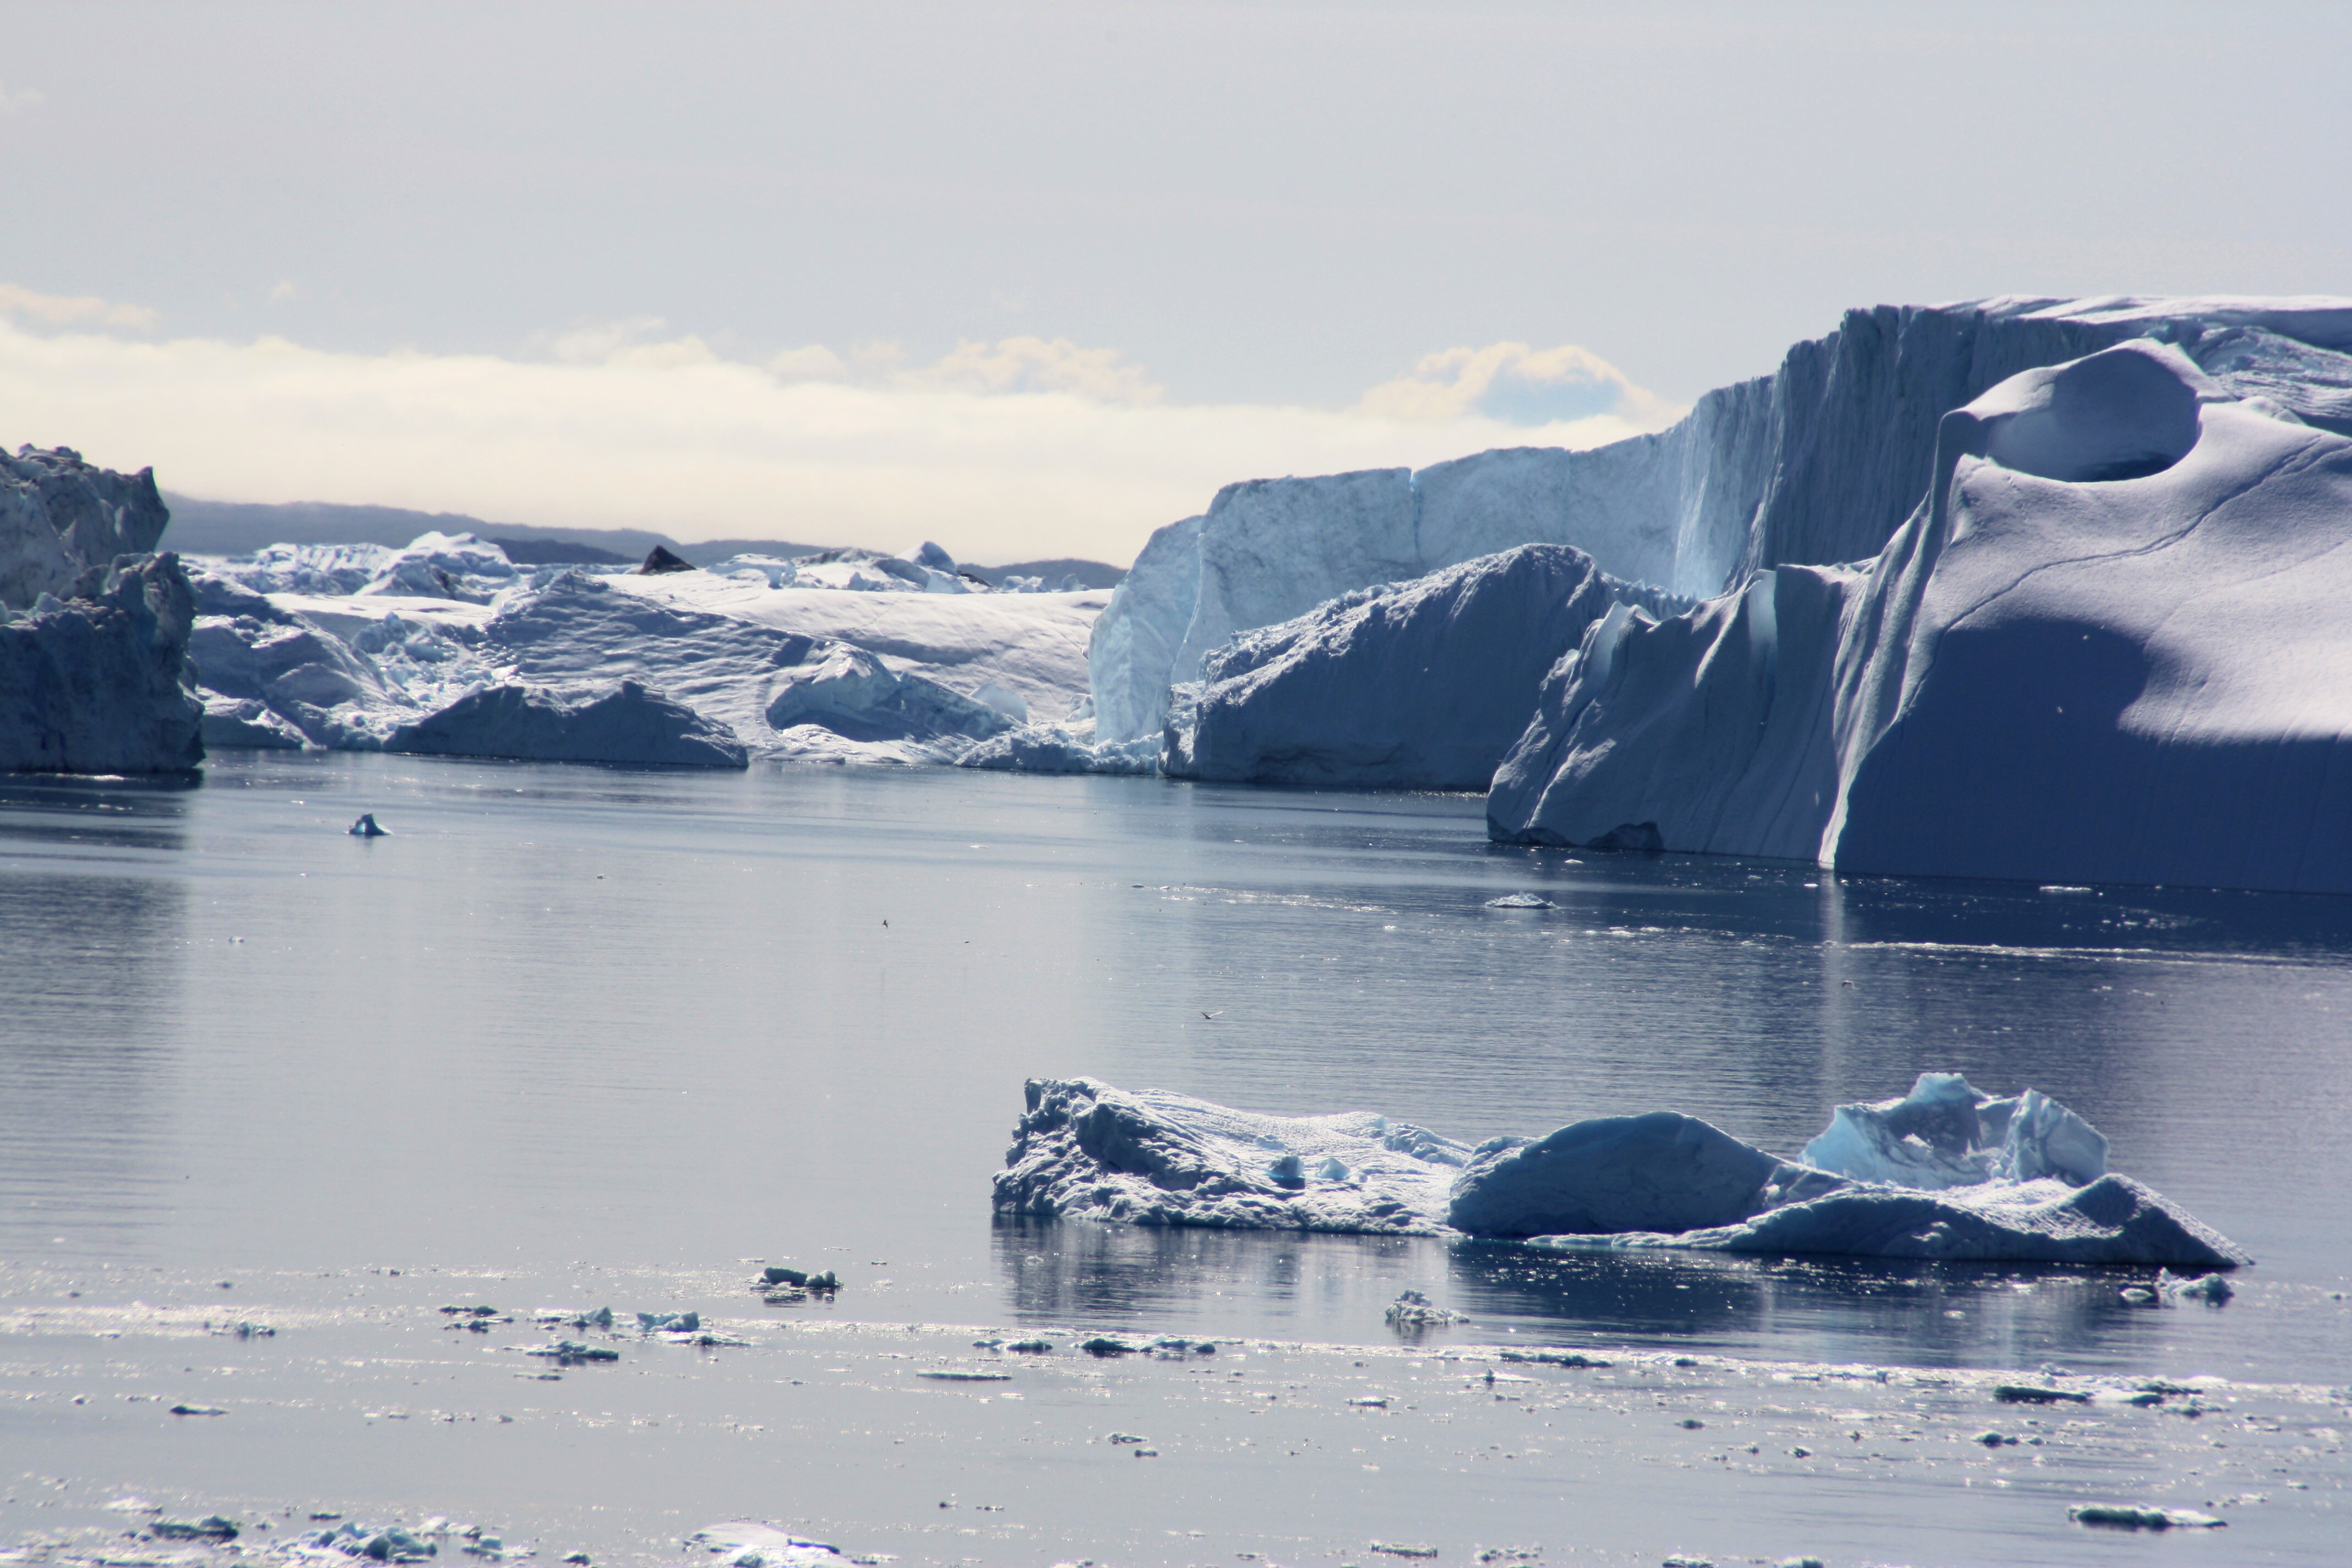 The Sermeq Kujualleq glacier discharges icebergs into the sea (I. Quaile, Ilulissat 2009)